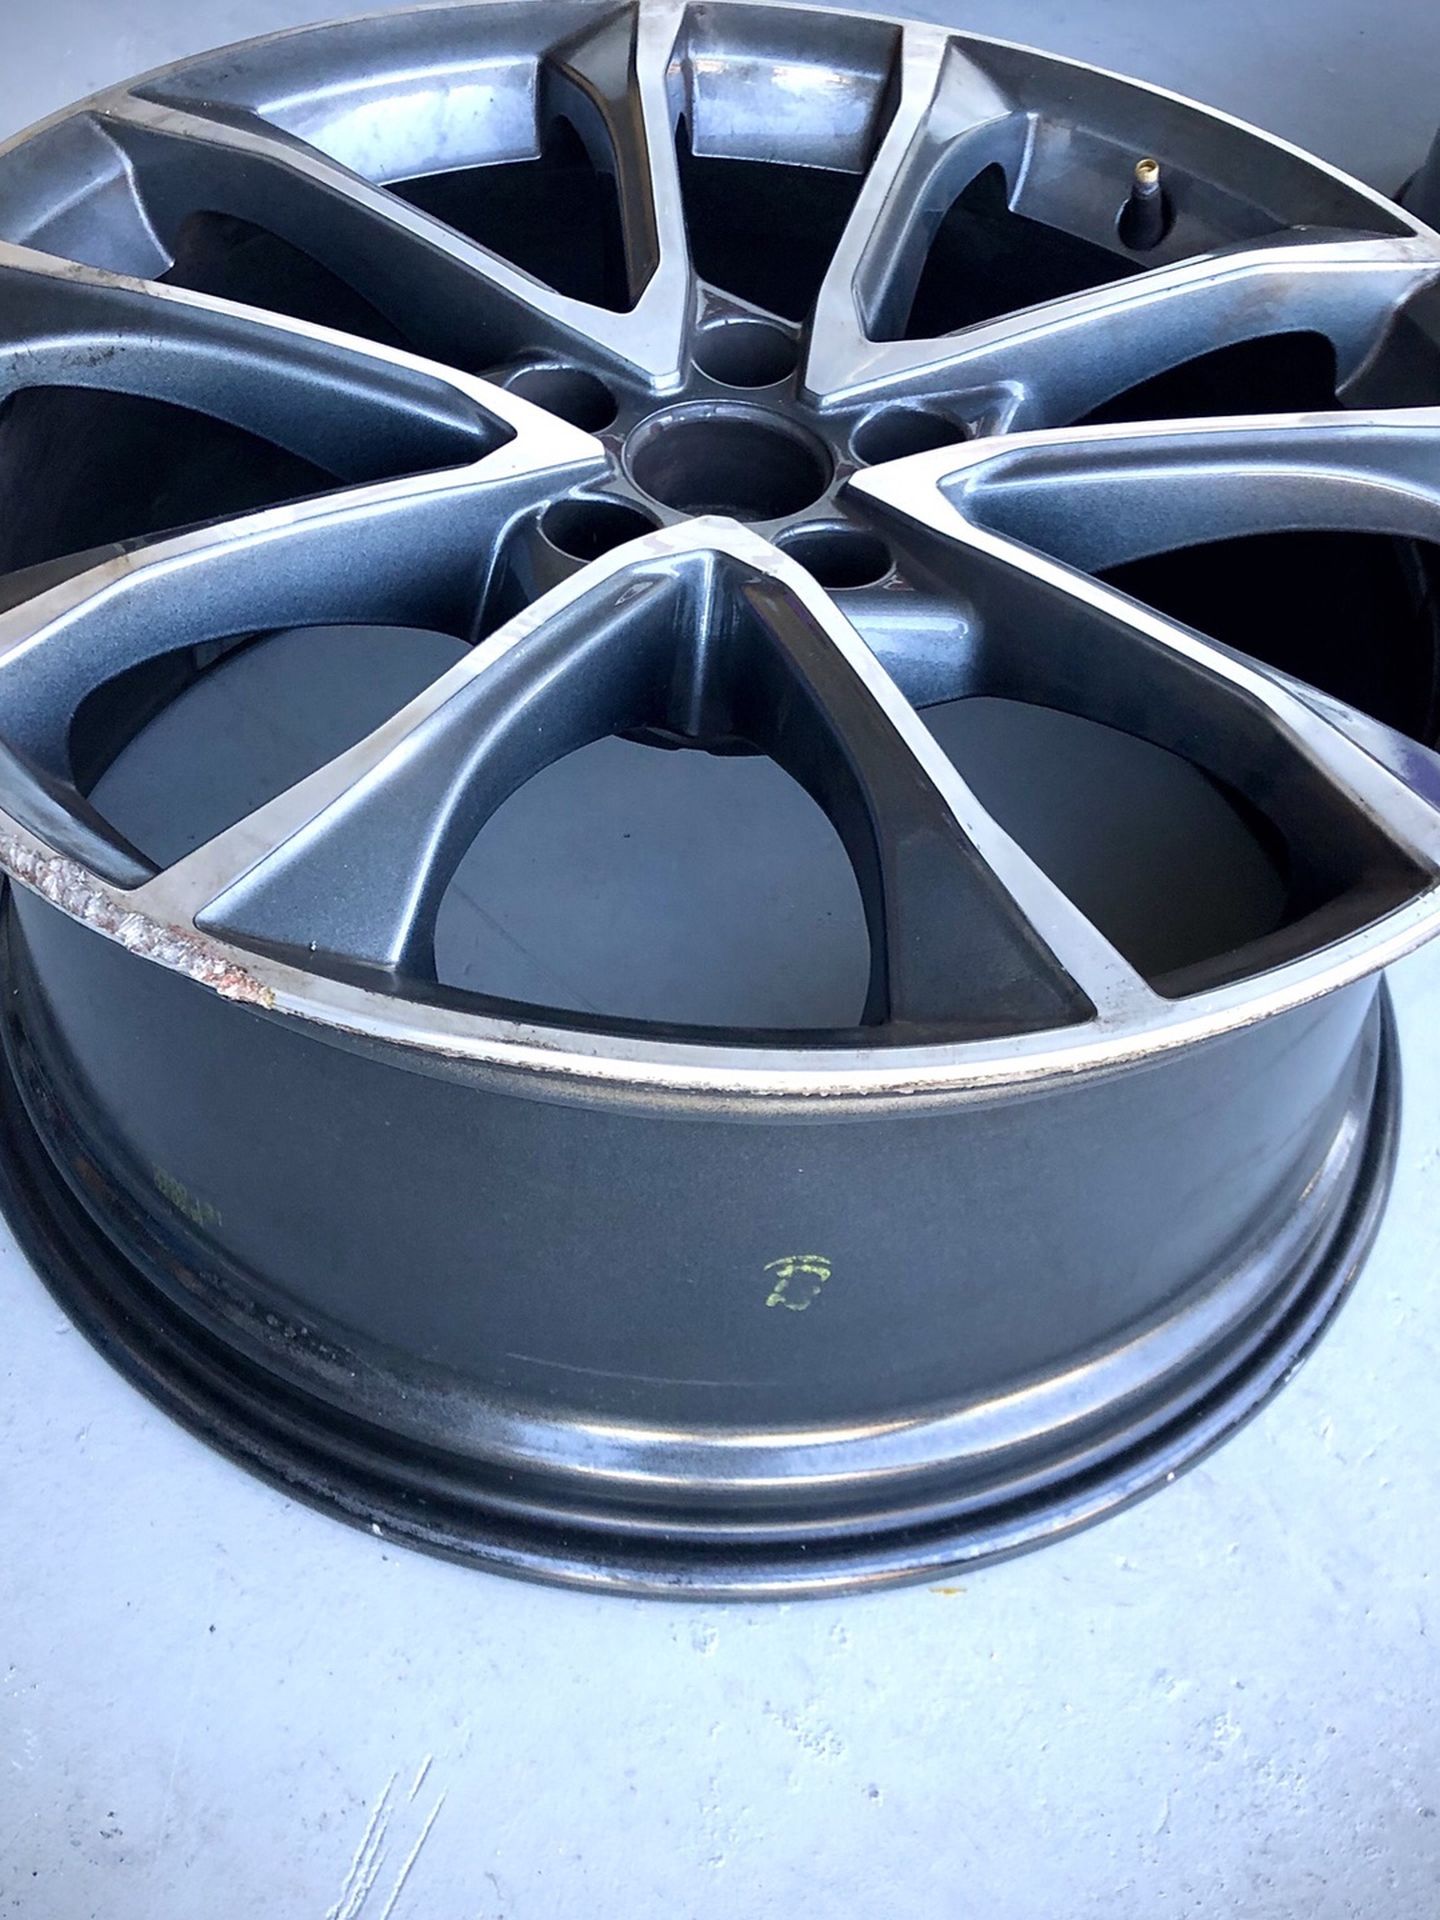 2018- S4 Audi 19 Inch Rims (damaged)